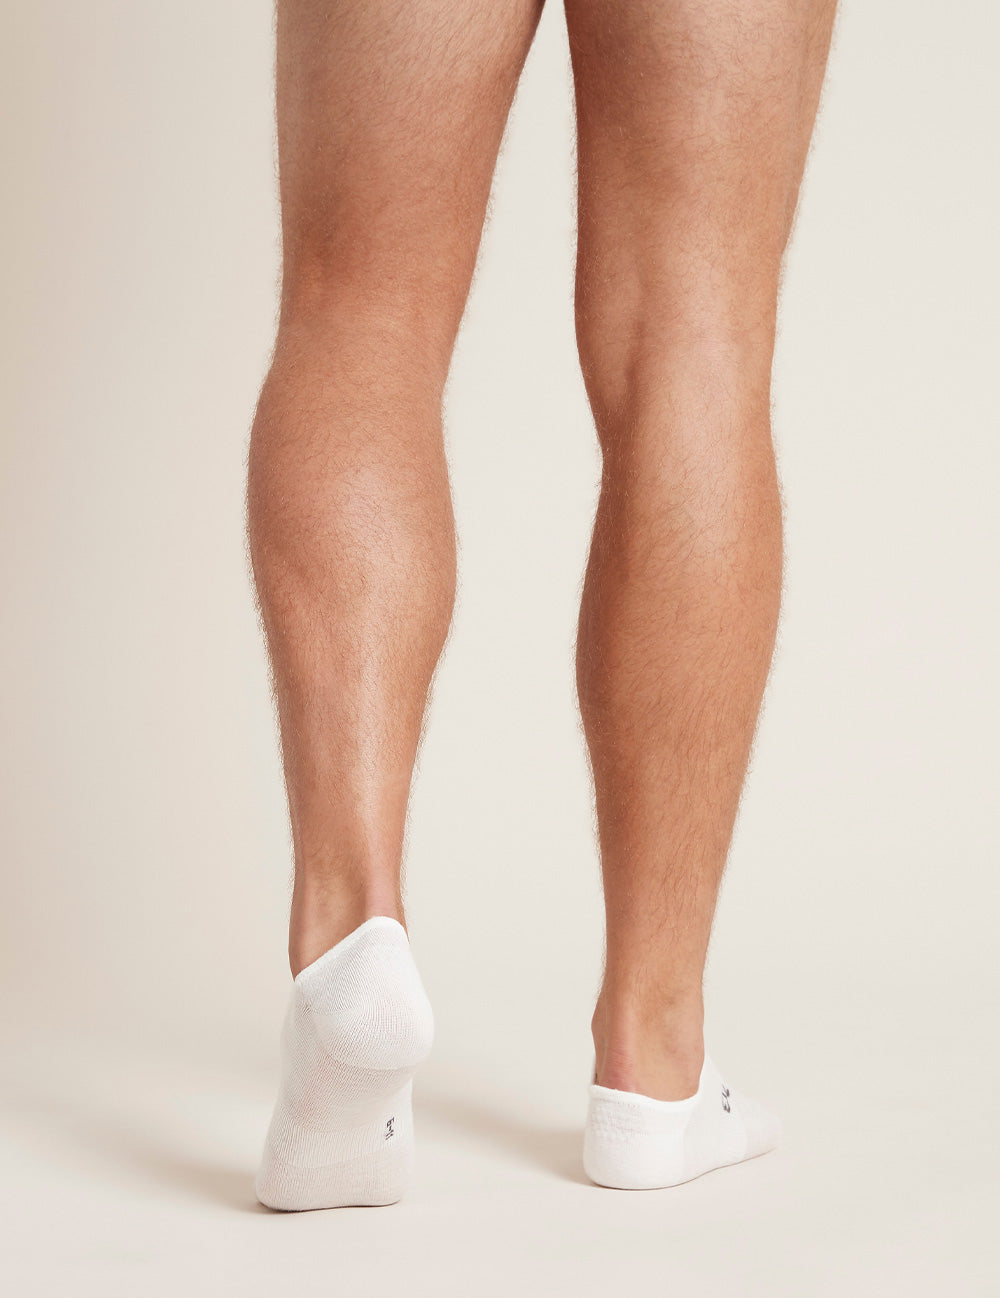 Men's Invisible Active Sports Socks